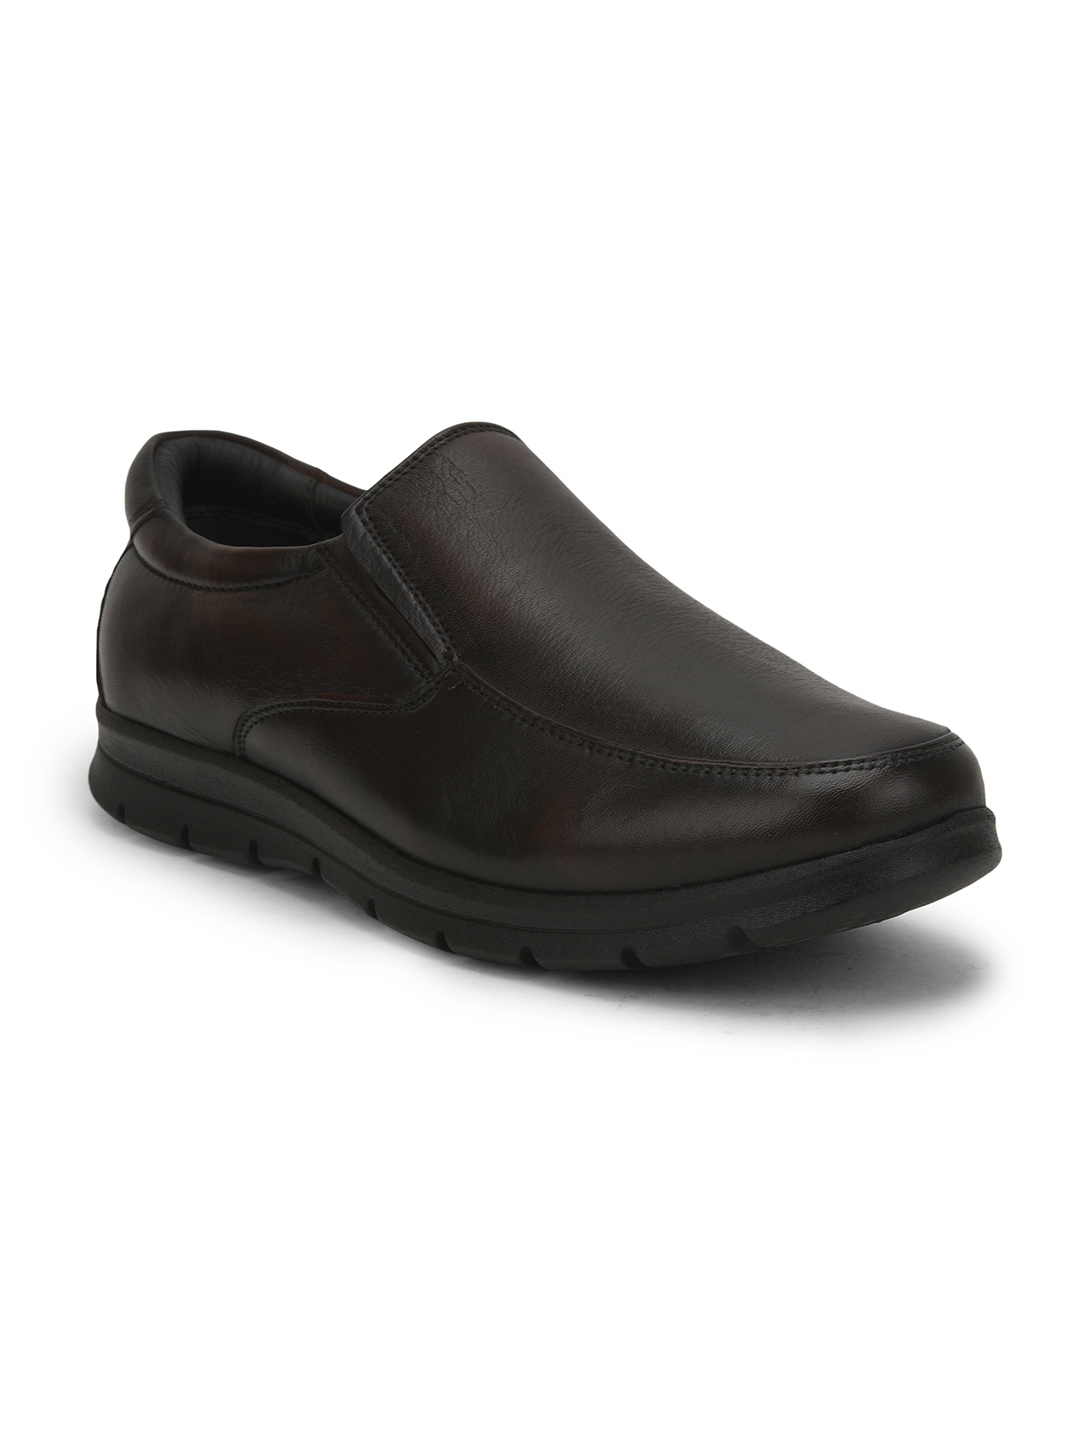 Liberty | Liberty Healers Jpl-232 Mens Brown Formal Shoes